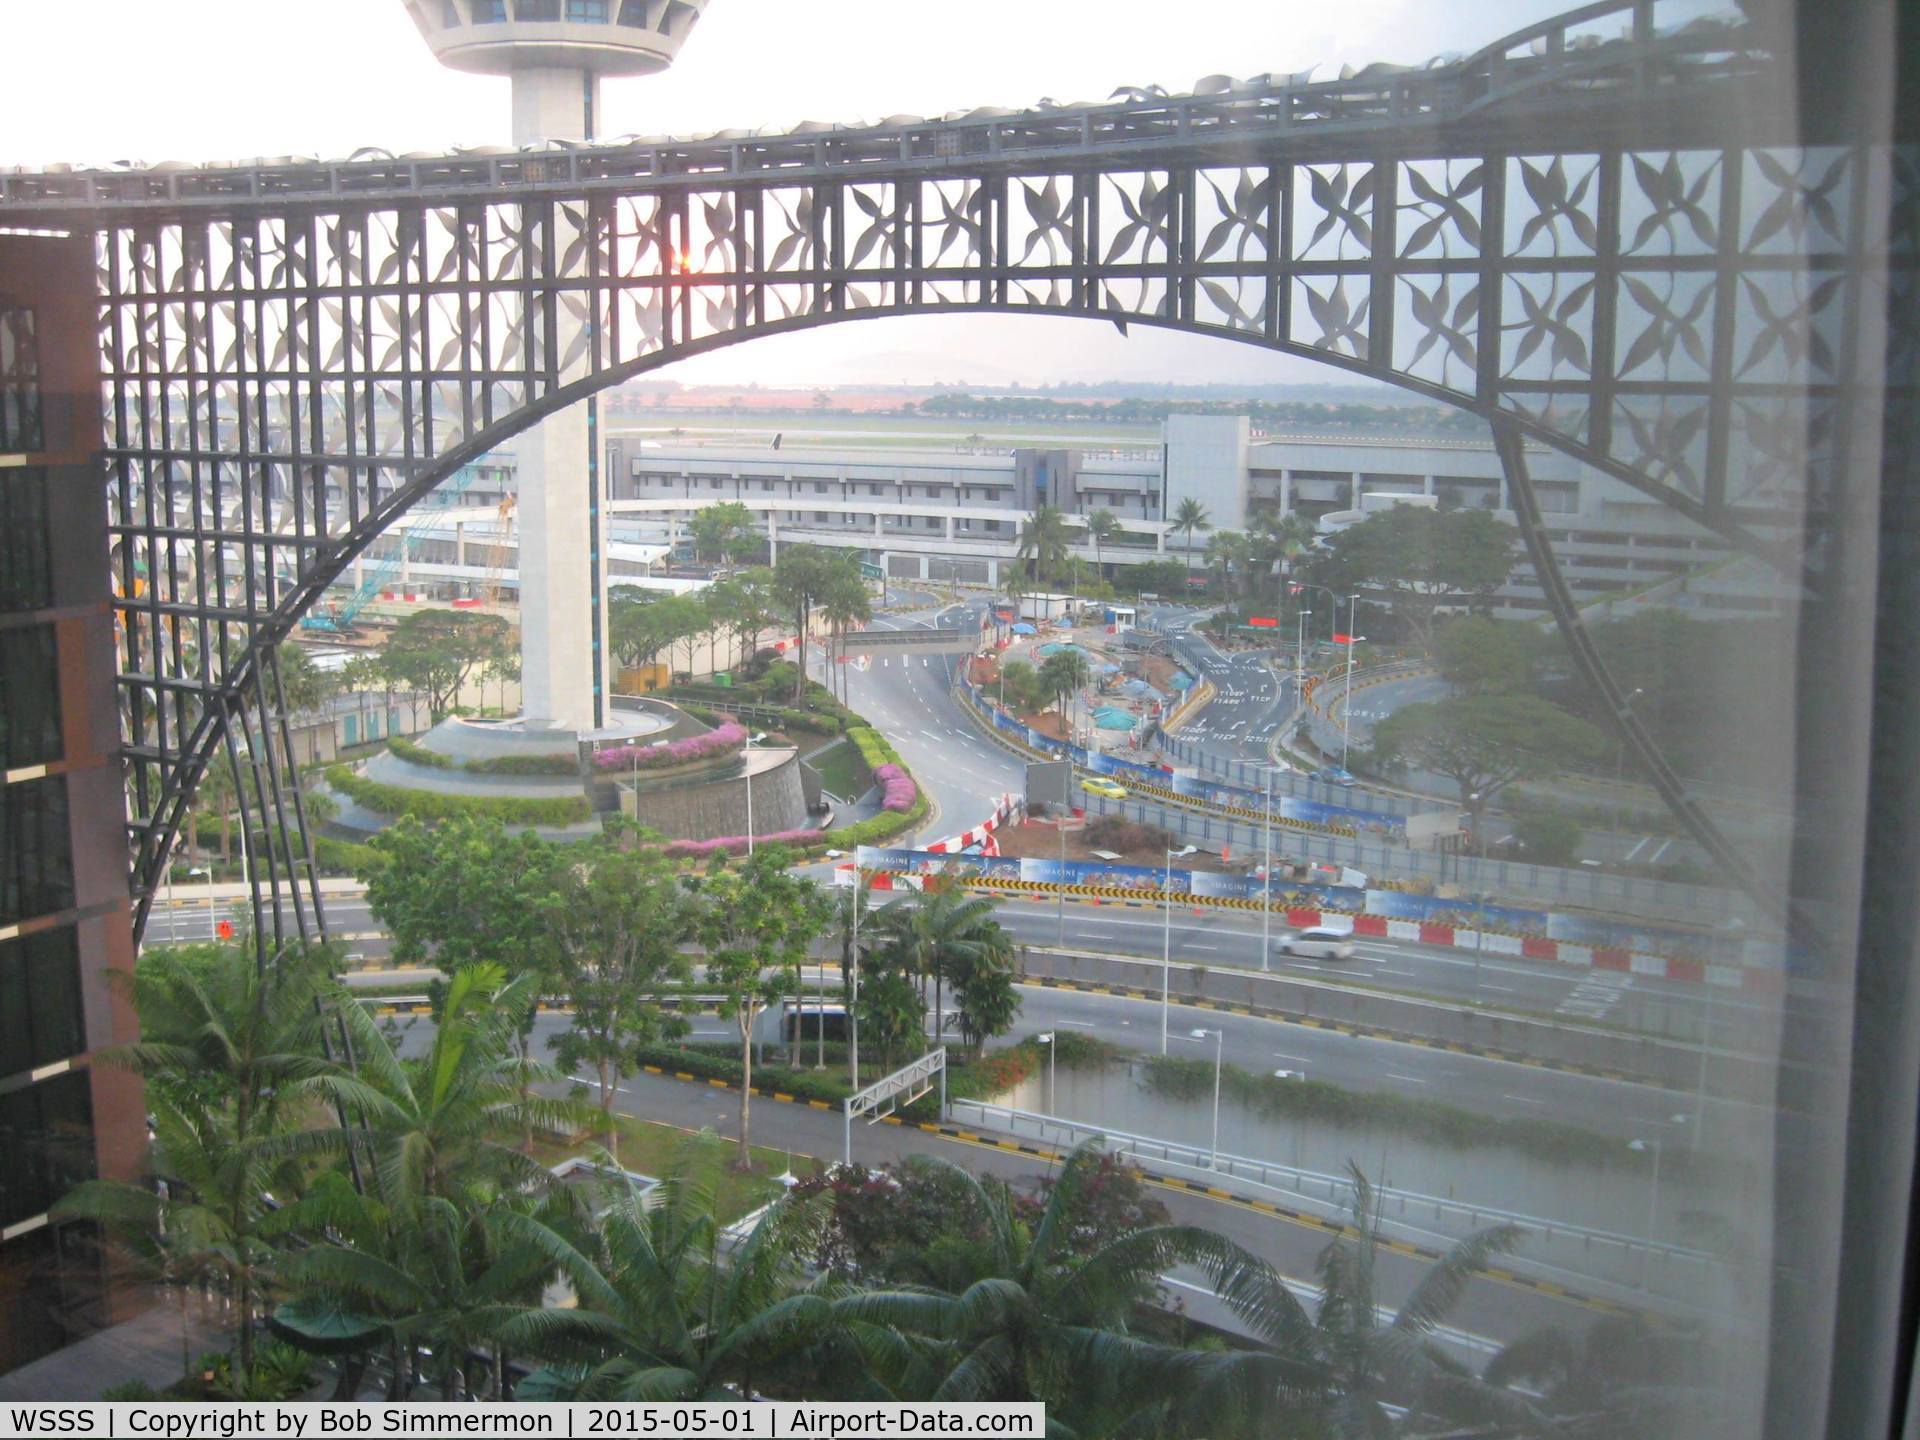 Singapore Changi Airport, Changi Singapore (WSSS) - Changi Airport looking east